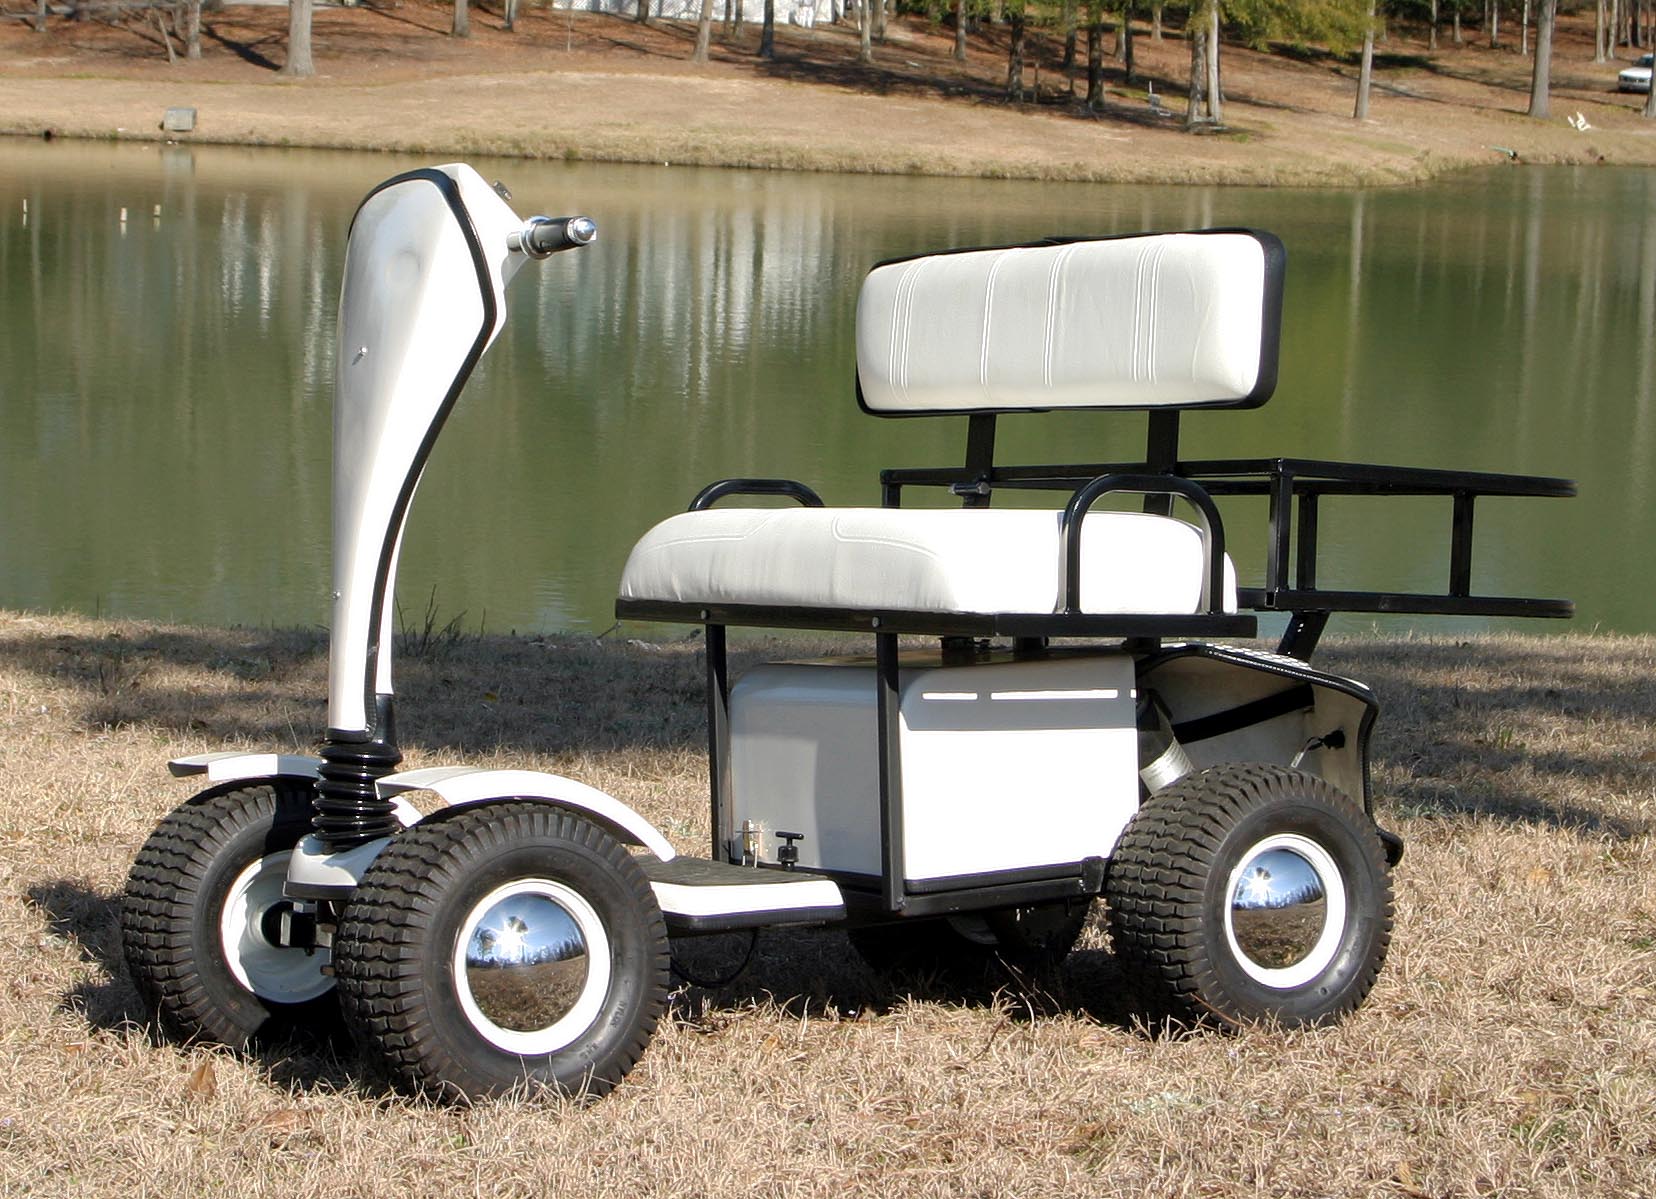 Revolutionary Portable Personal Transportation Vehicle